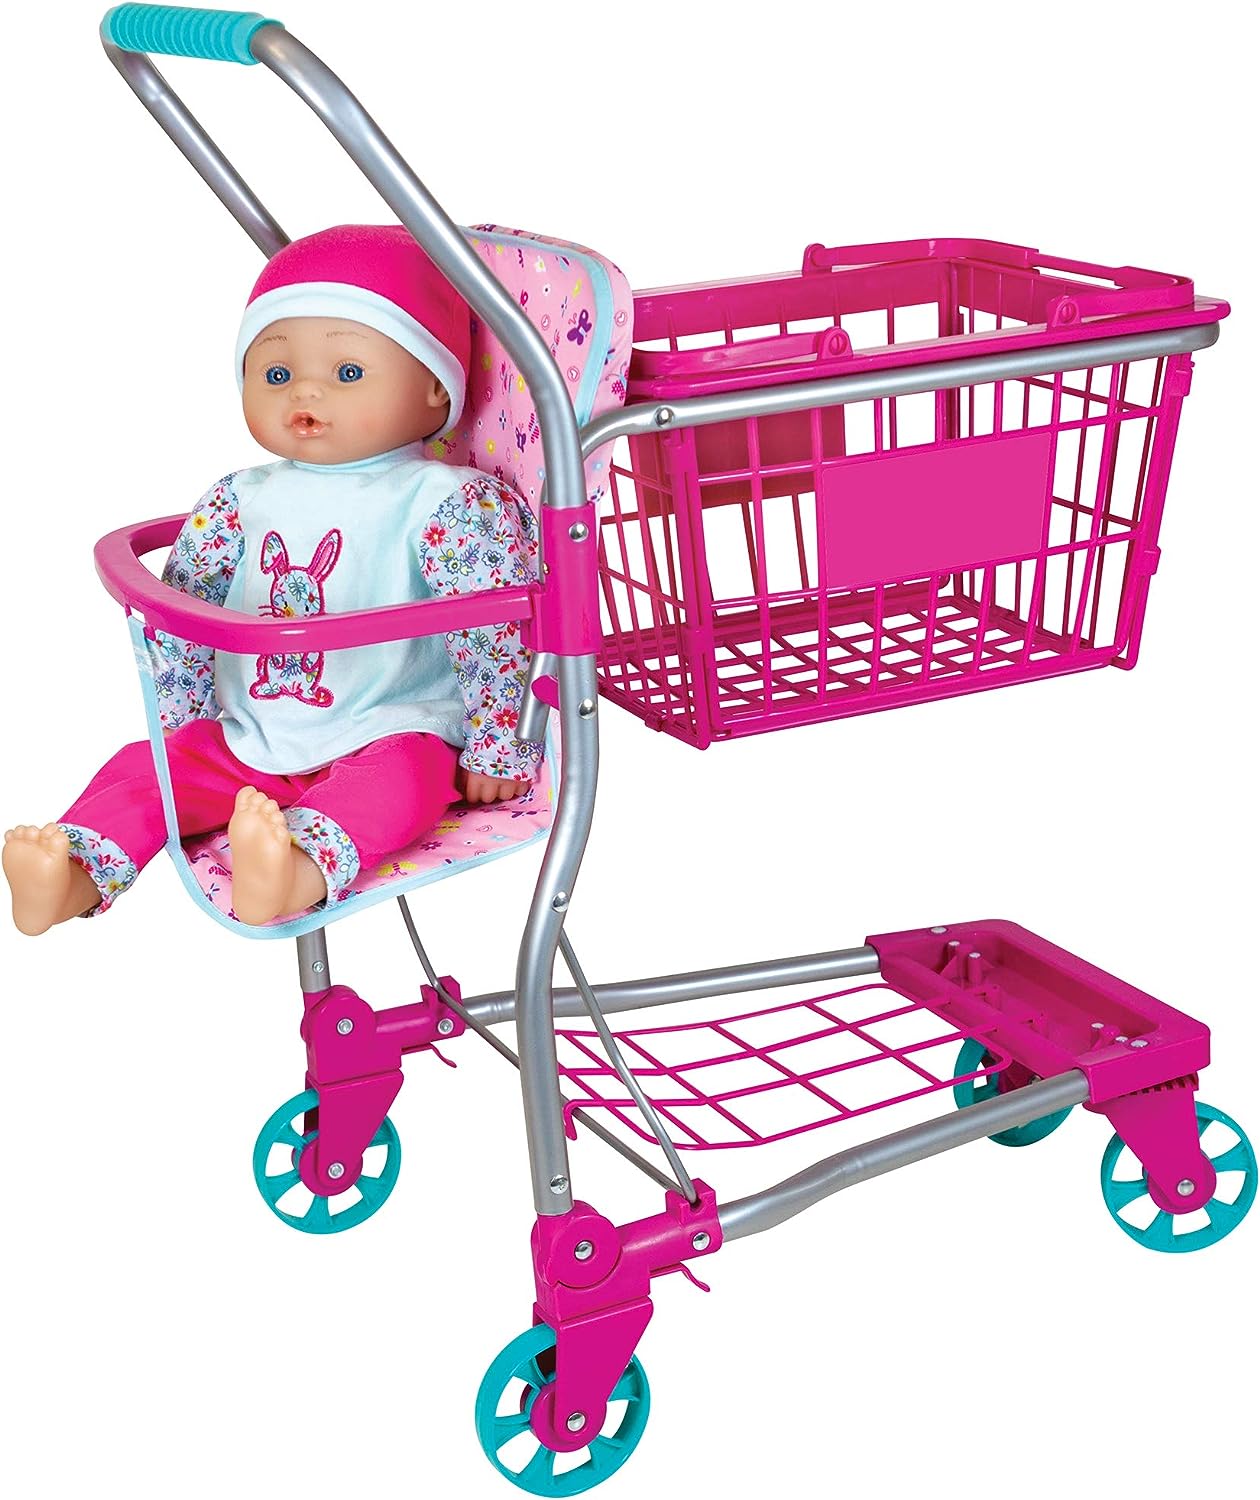 Lissi - Shopping Cart